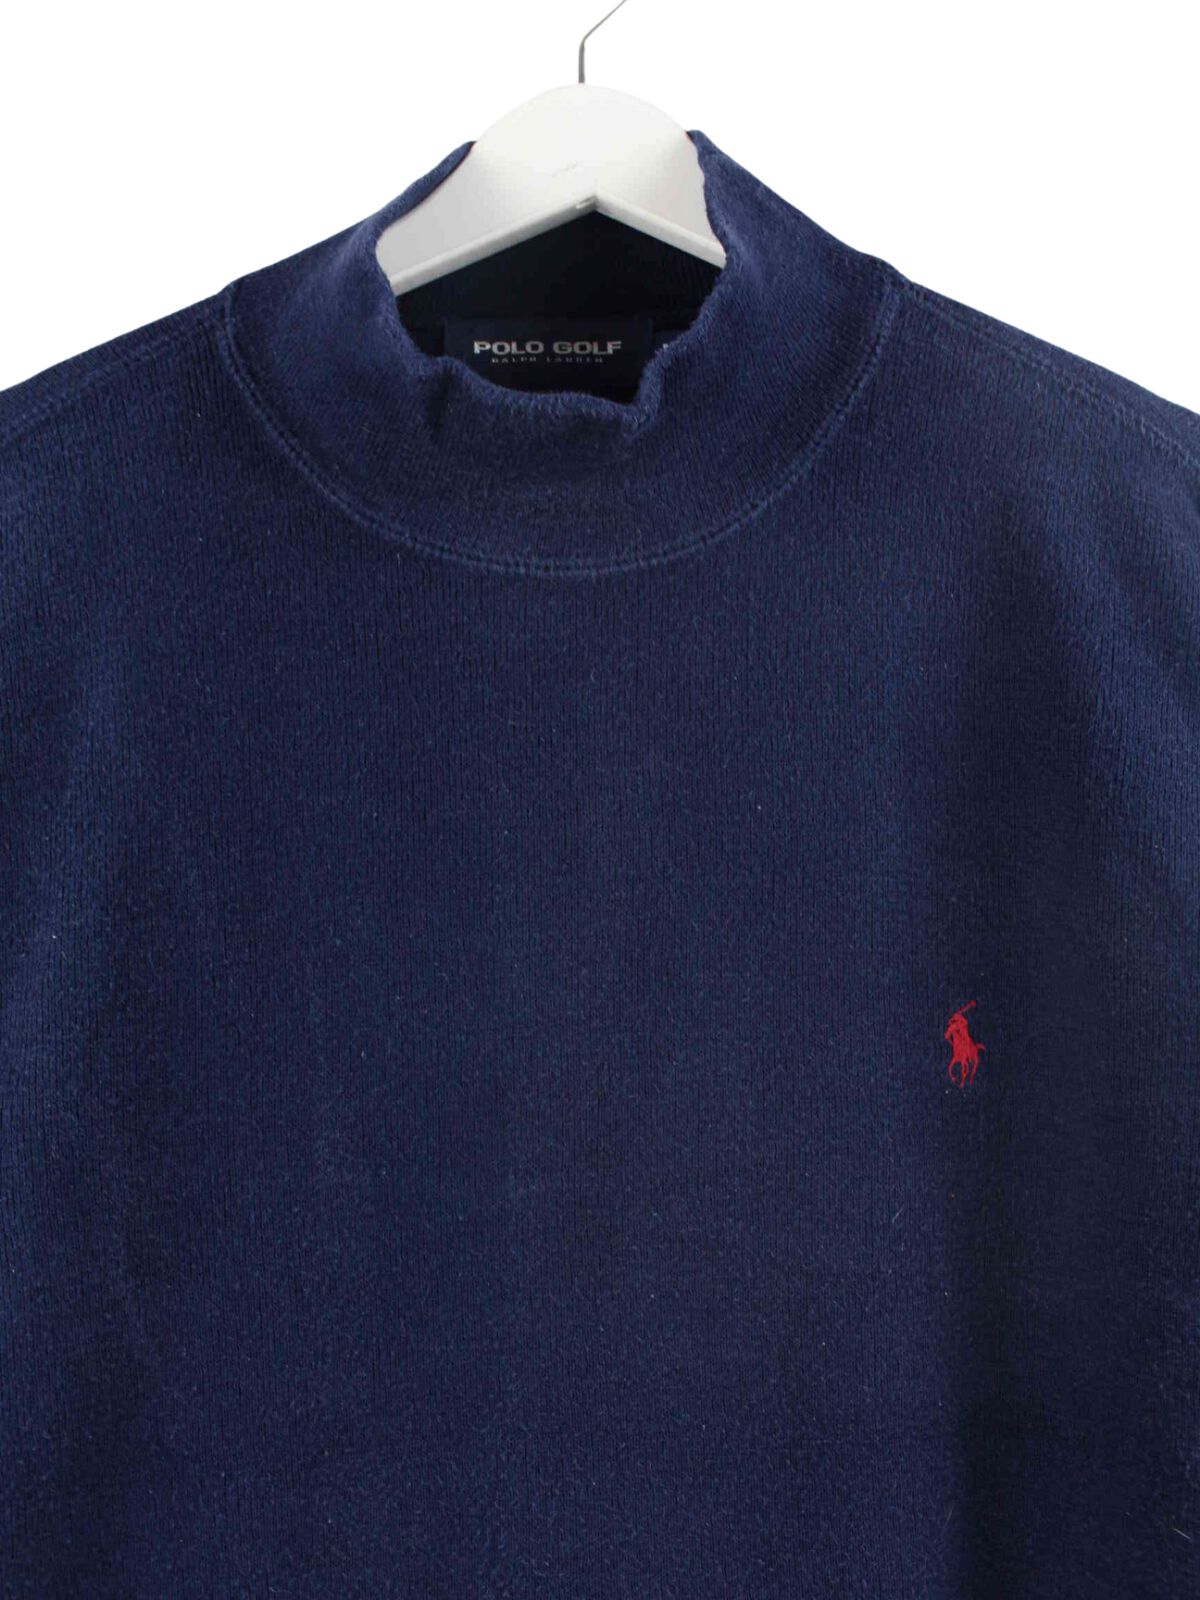 Ralph Lauren Sweater Blau M